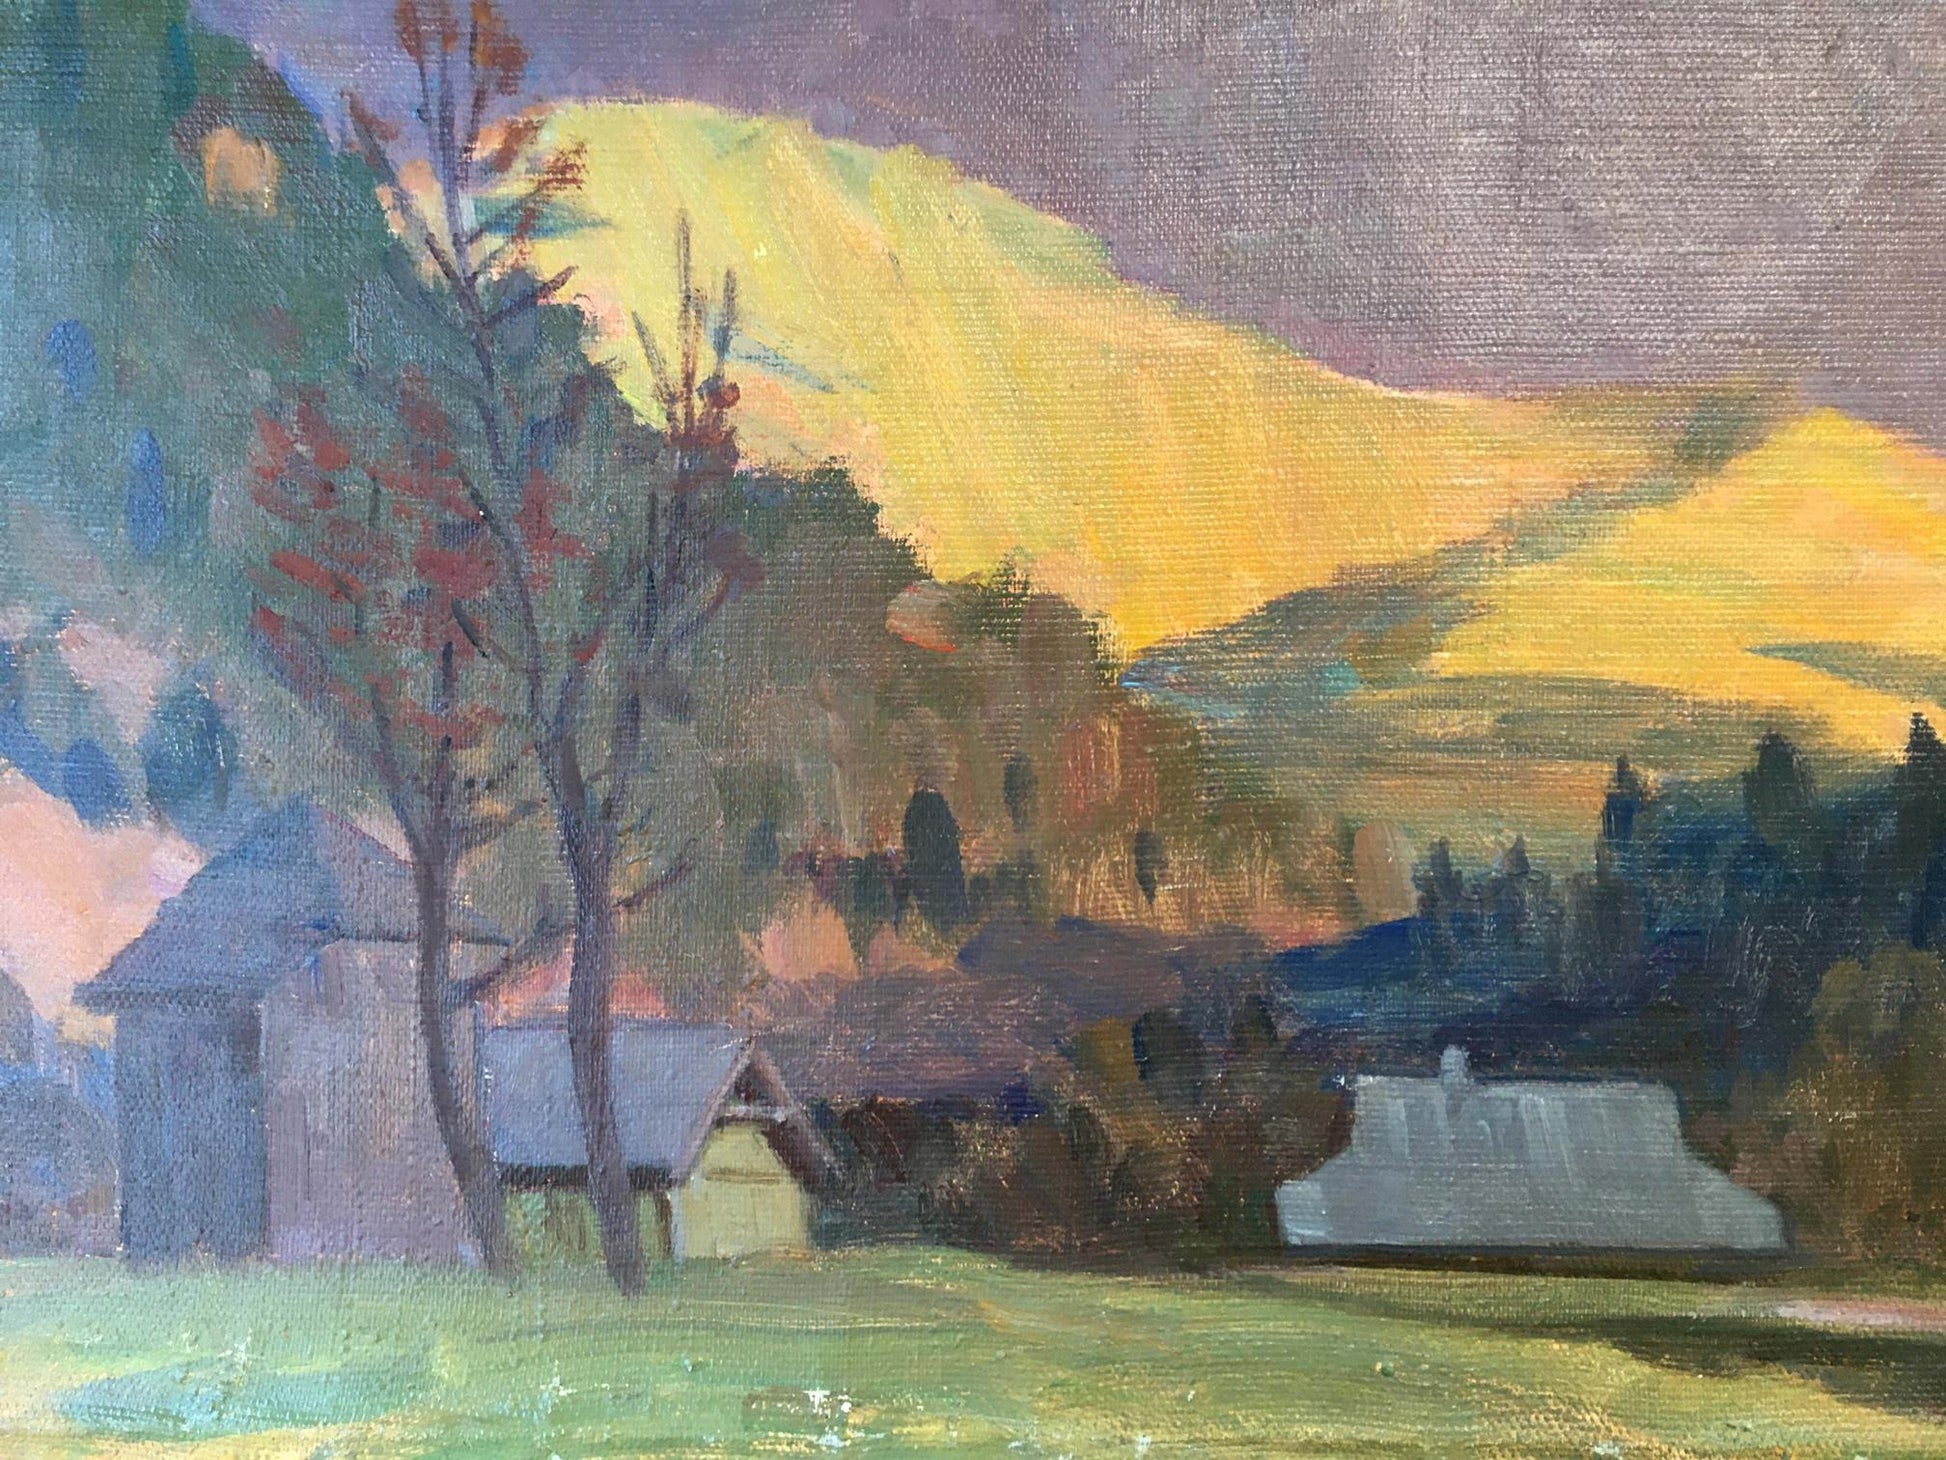 The oil painting by Chernikov Vladimir Mikhailovich showcases a scenic mountain vista